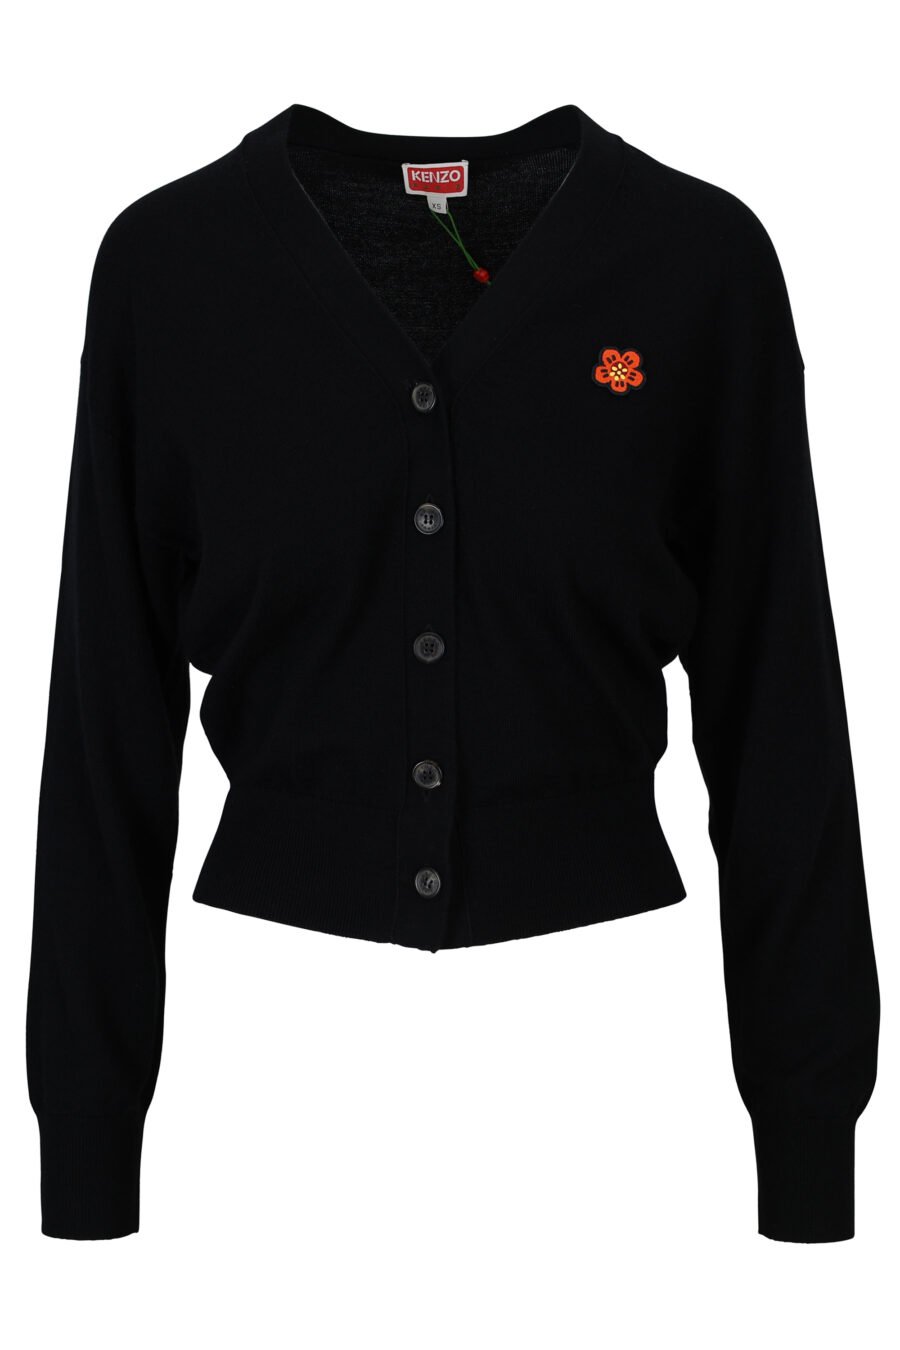 Camisola de lã preta com mini-logotipo "boke flower" - 3612230444249